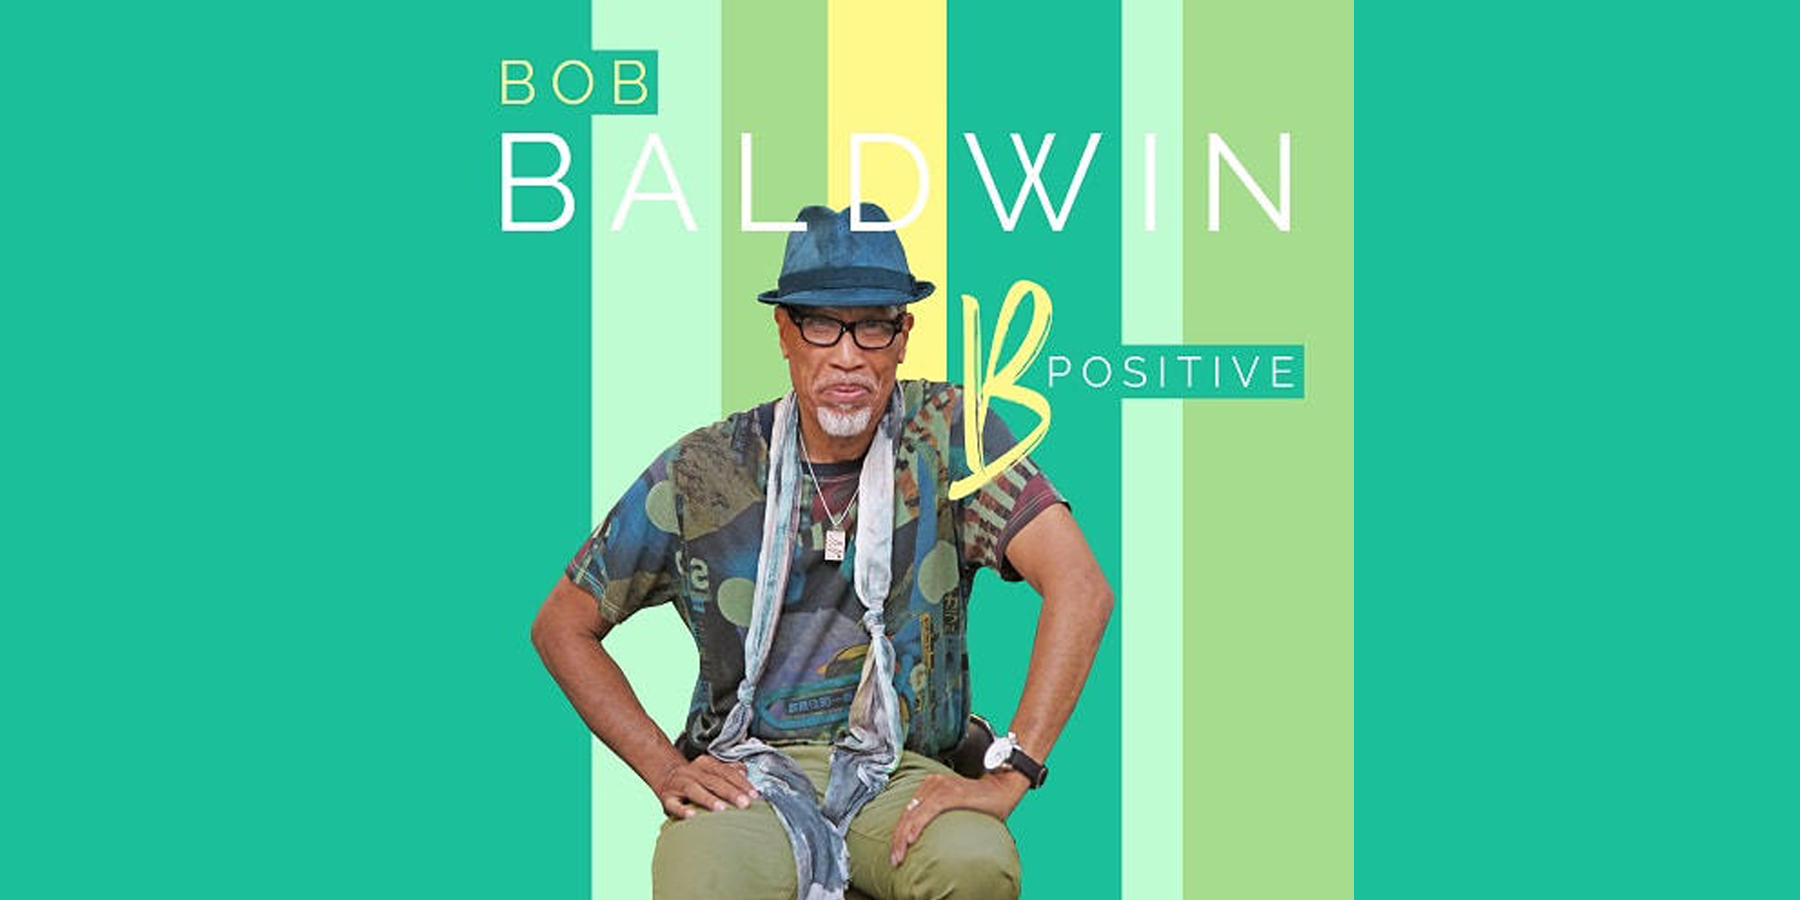 Get to know Bob Baldwin